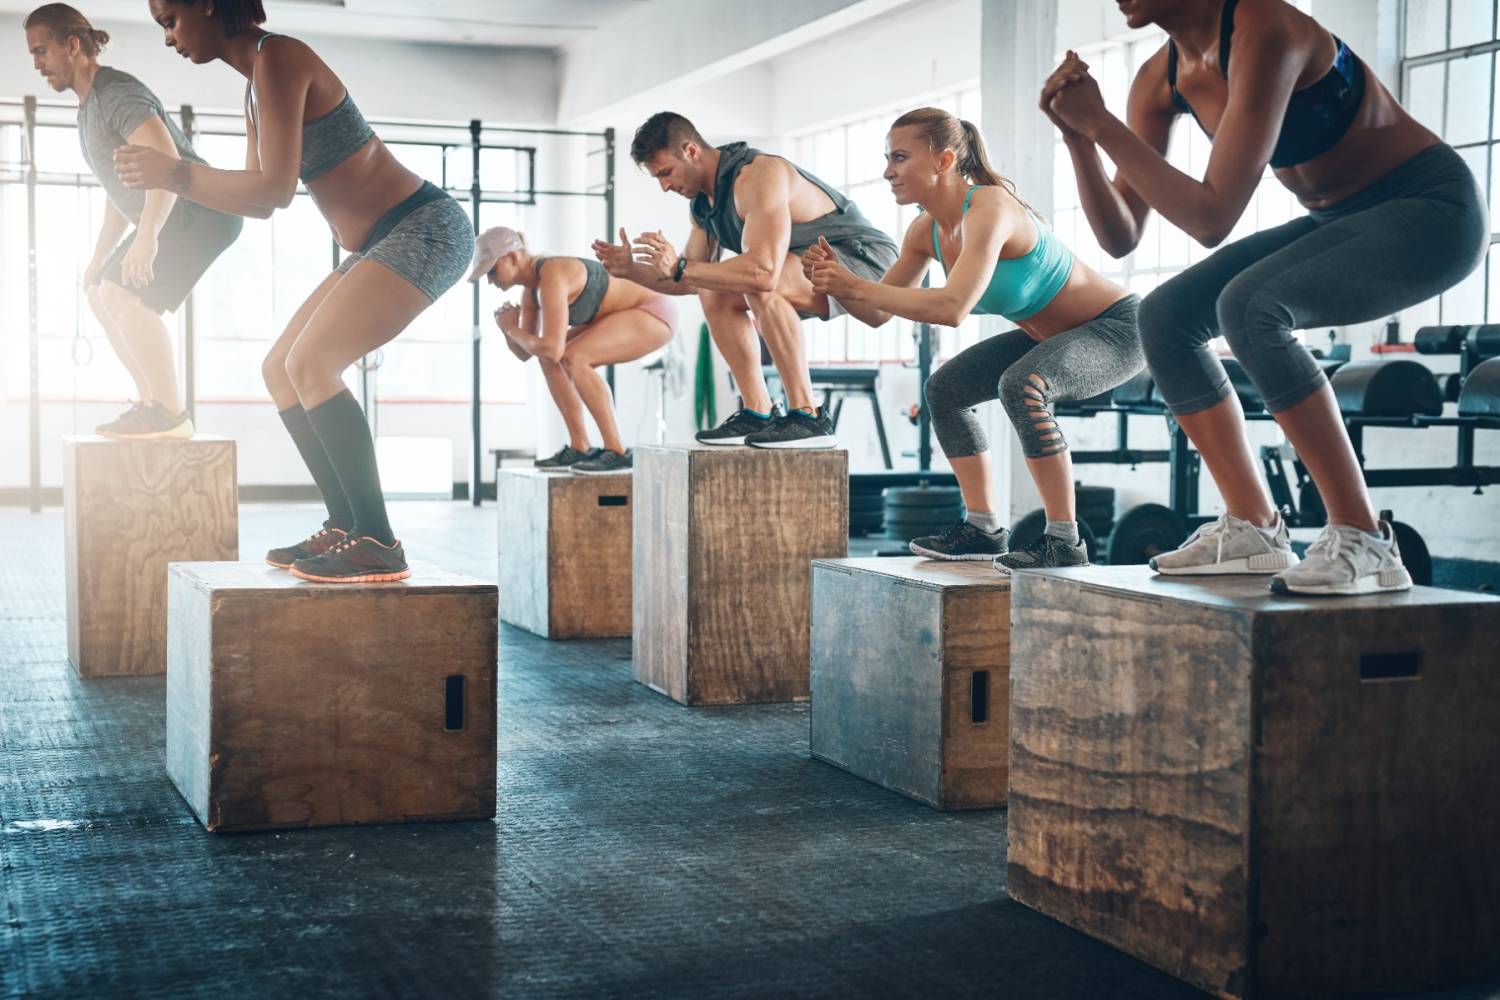 A gym class doing box jump squats